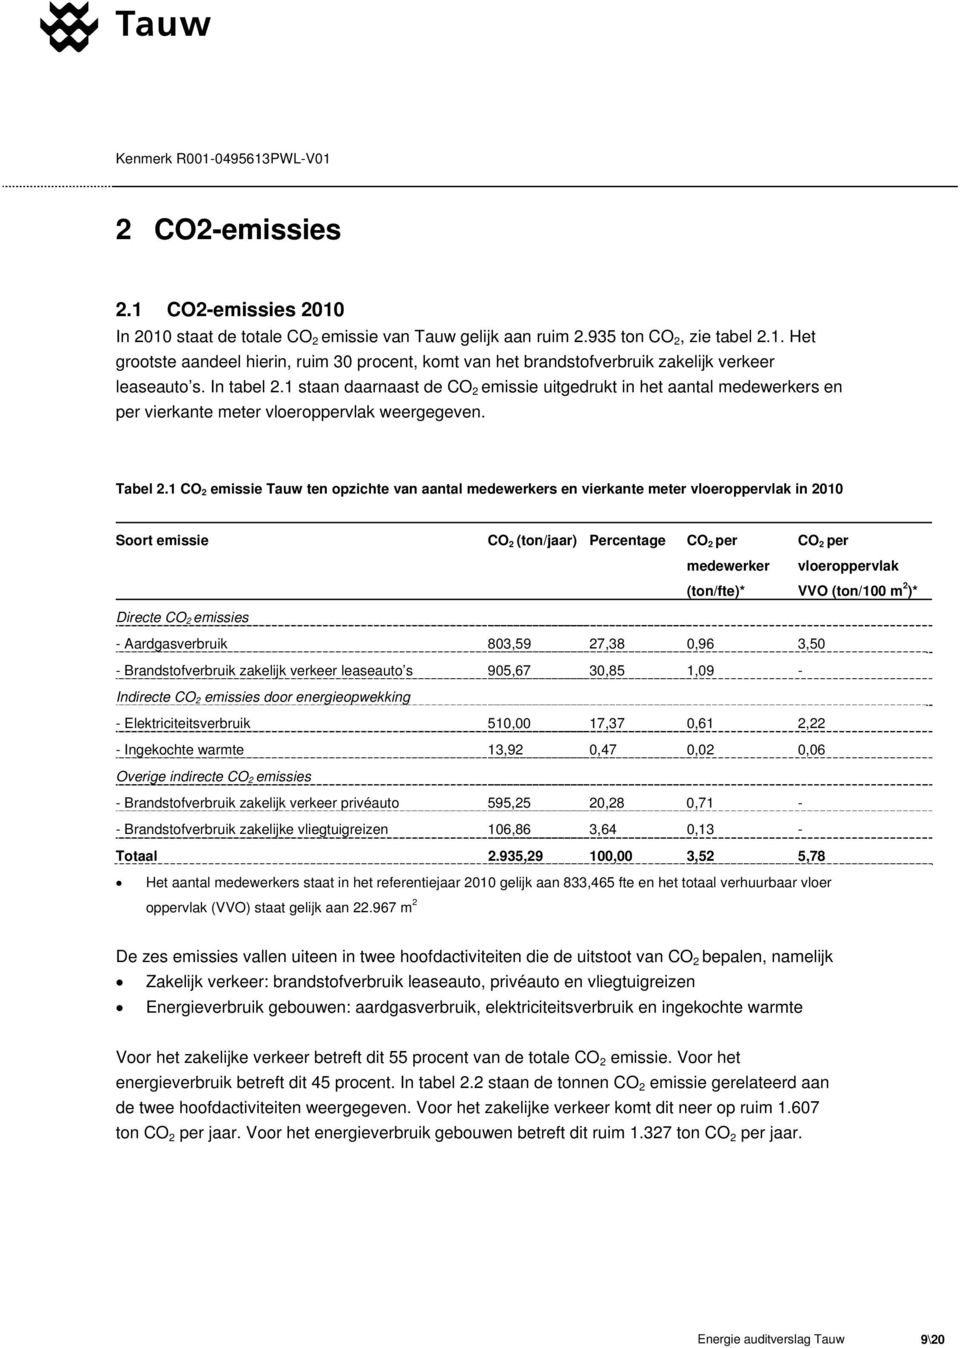 1 CO 2 emissie Tauw ten opzichte van aantal medewerkers en vierkante meter vloeroppervlak in 2010 Soort emissie CO 2 (ton/jaar) Percentage CO 2 per medewerker (ton/fte)* CO 2 per vloeroppervlak VVO